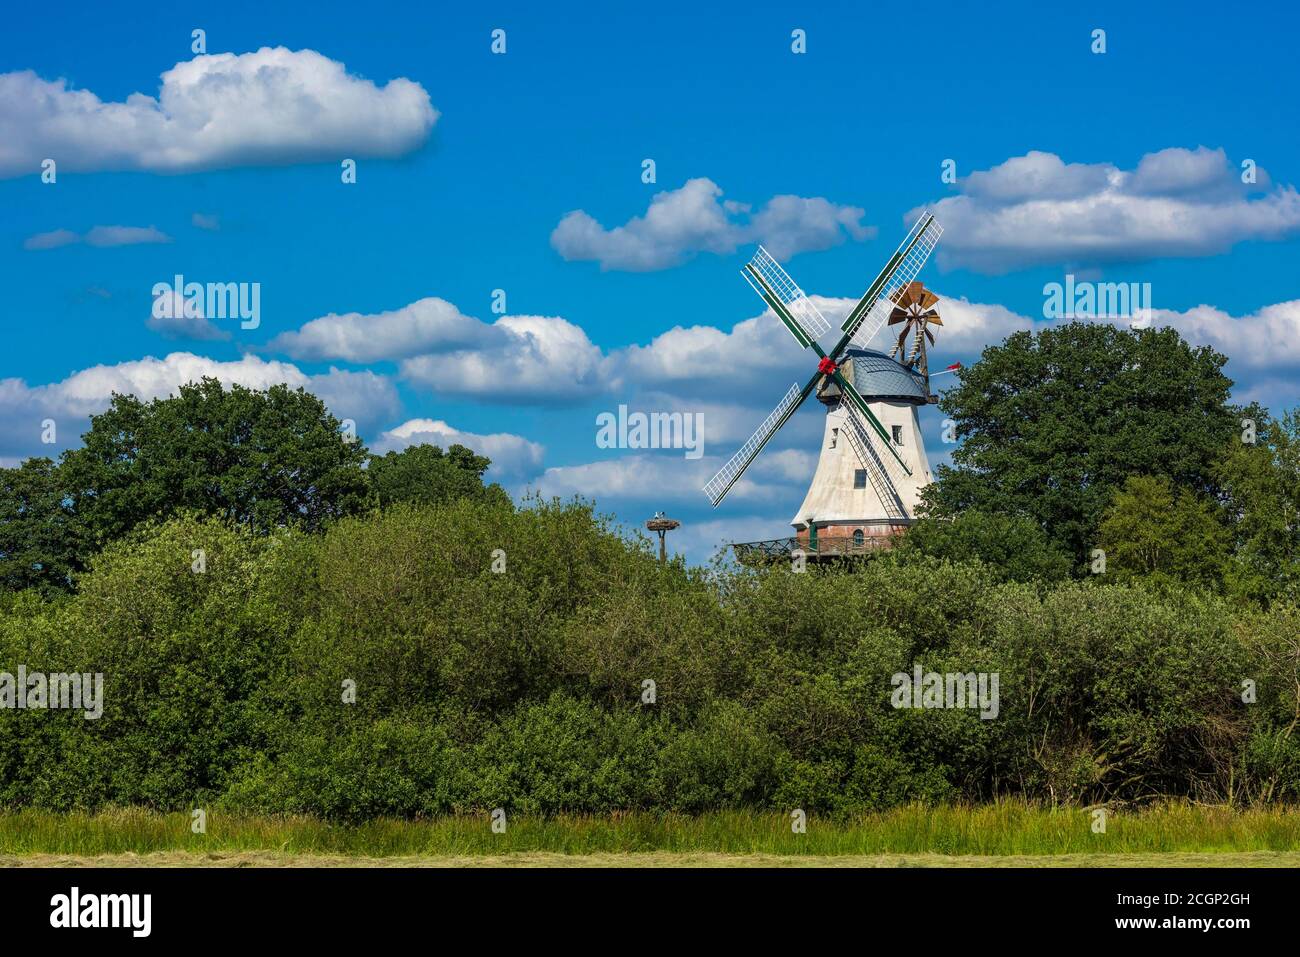 Ebkensche windmill in Barssel an der Soeste, Oldenburger Muensterland, Barssel, Lower Saxony, Germany Stock Photo